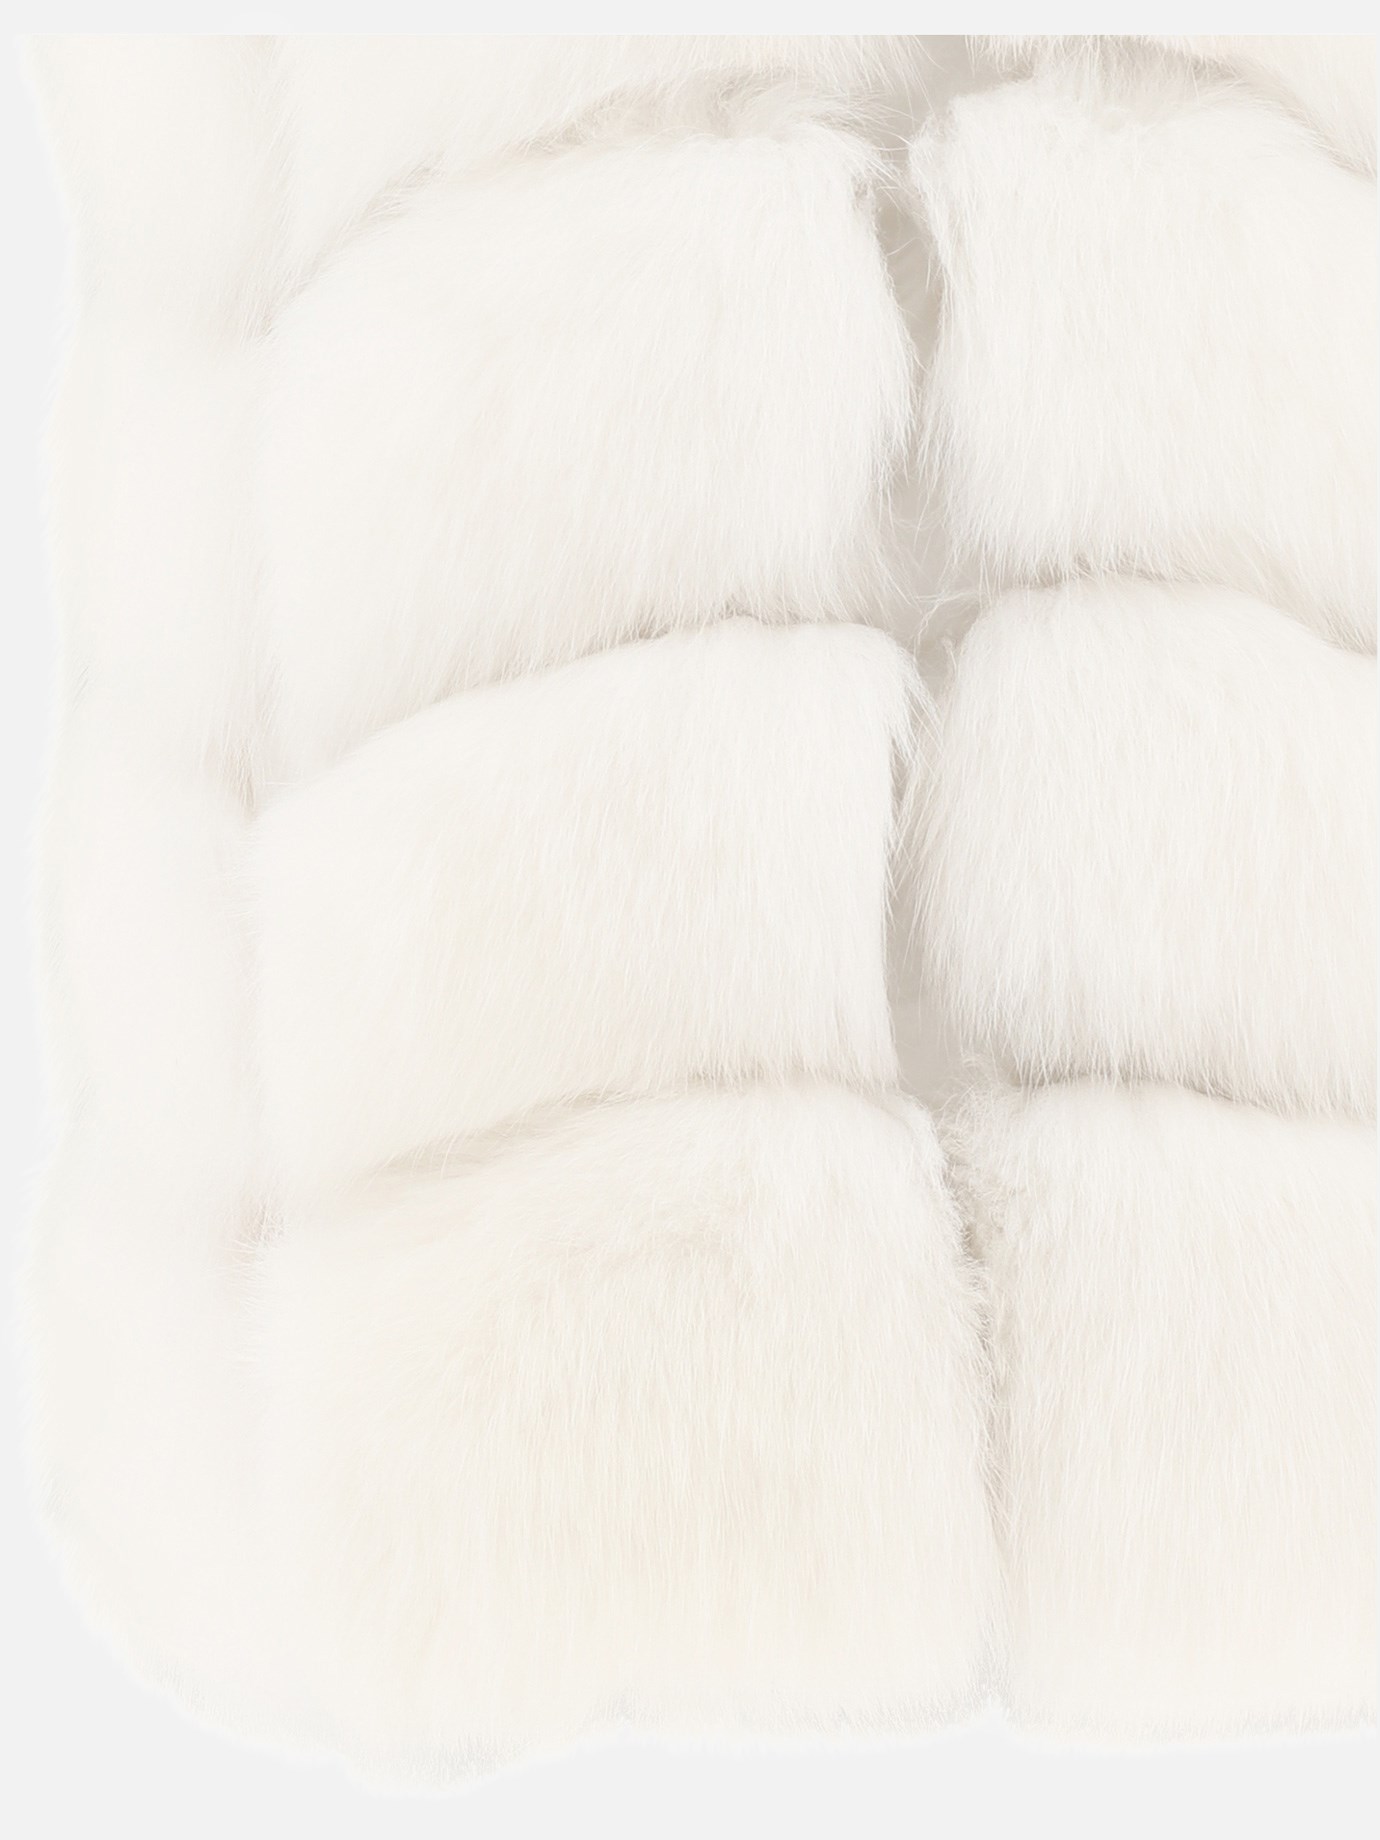  Quadrotti  sleeveless fur jacket by Frame Fur